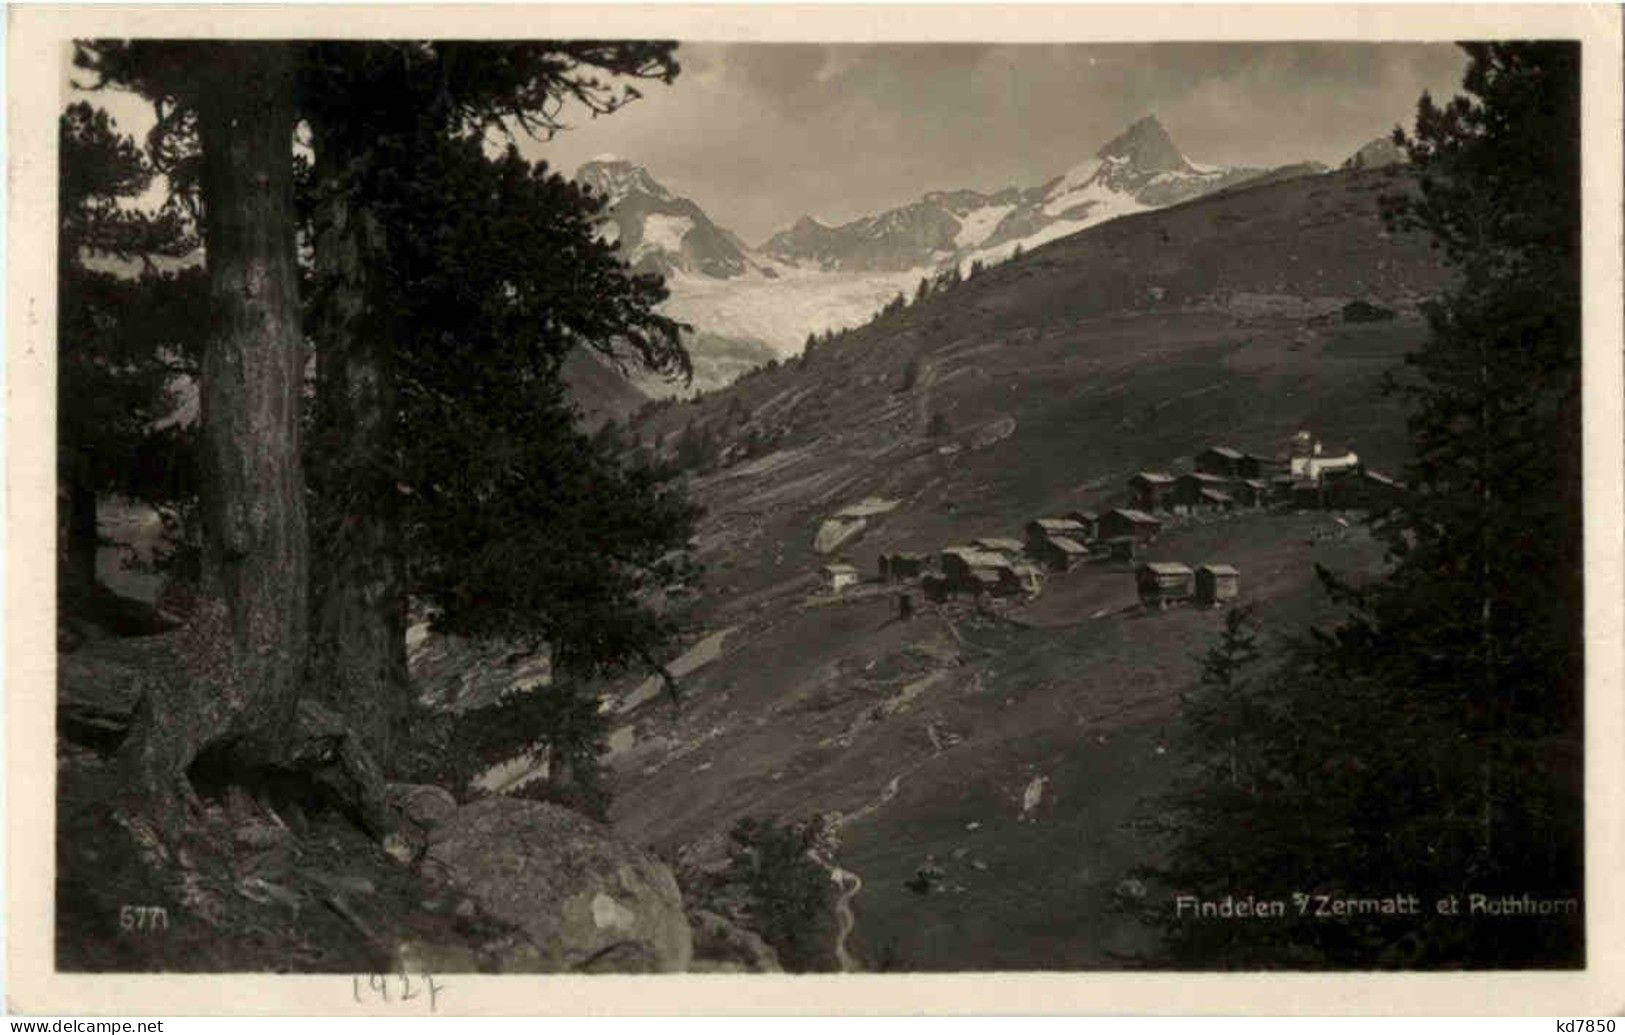 Findelen S Zermatt - Zermatt